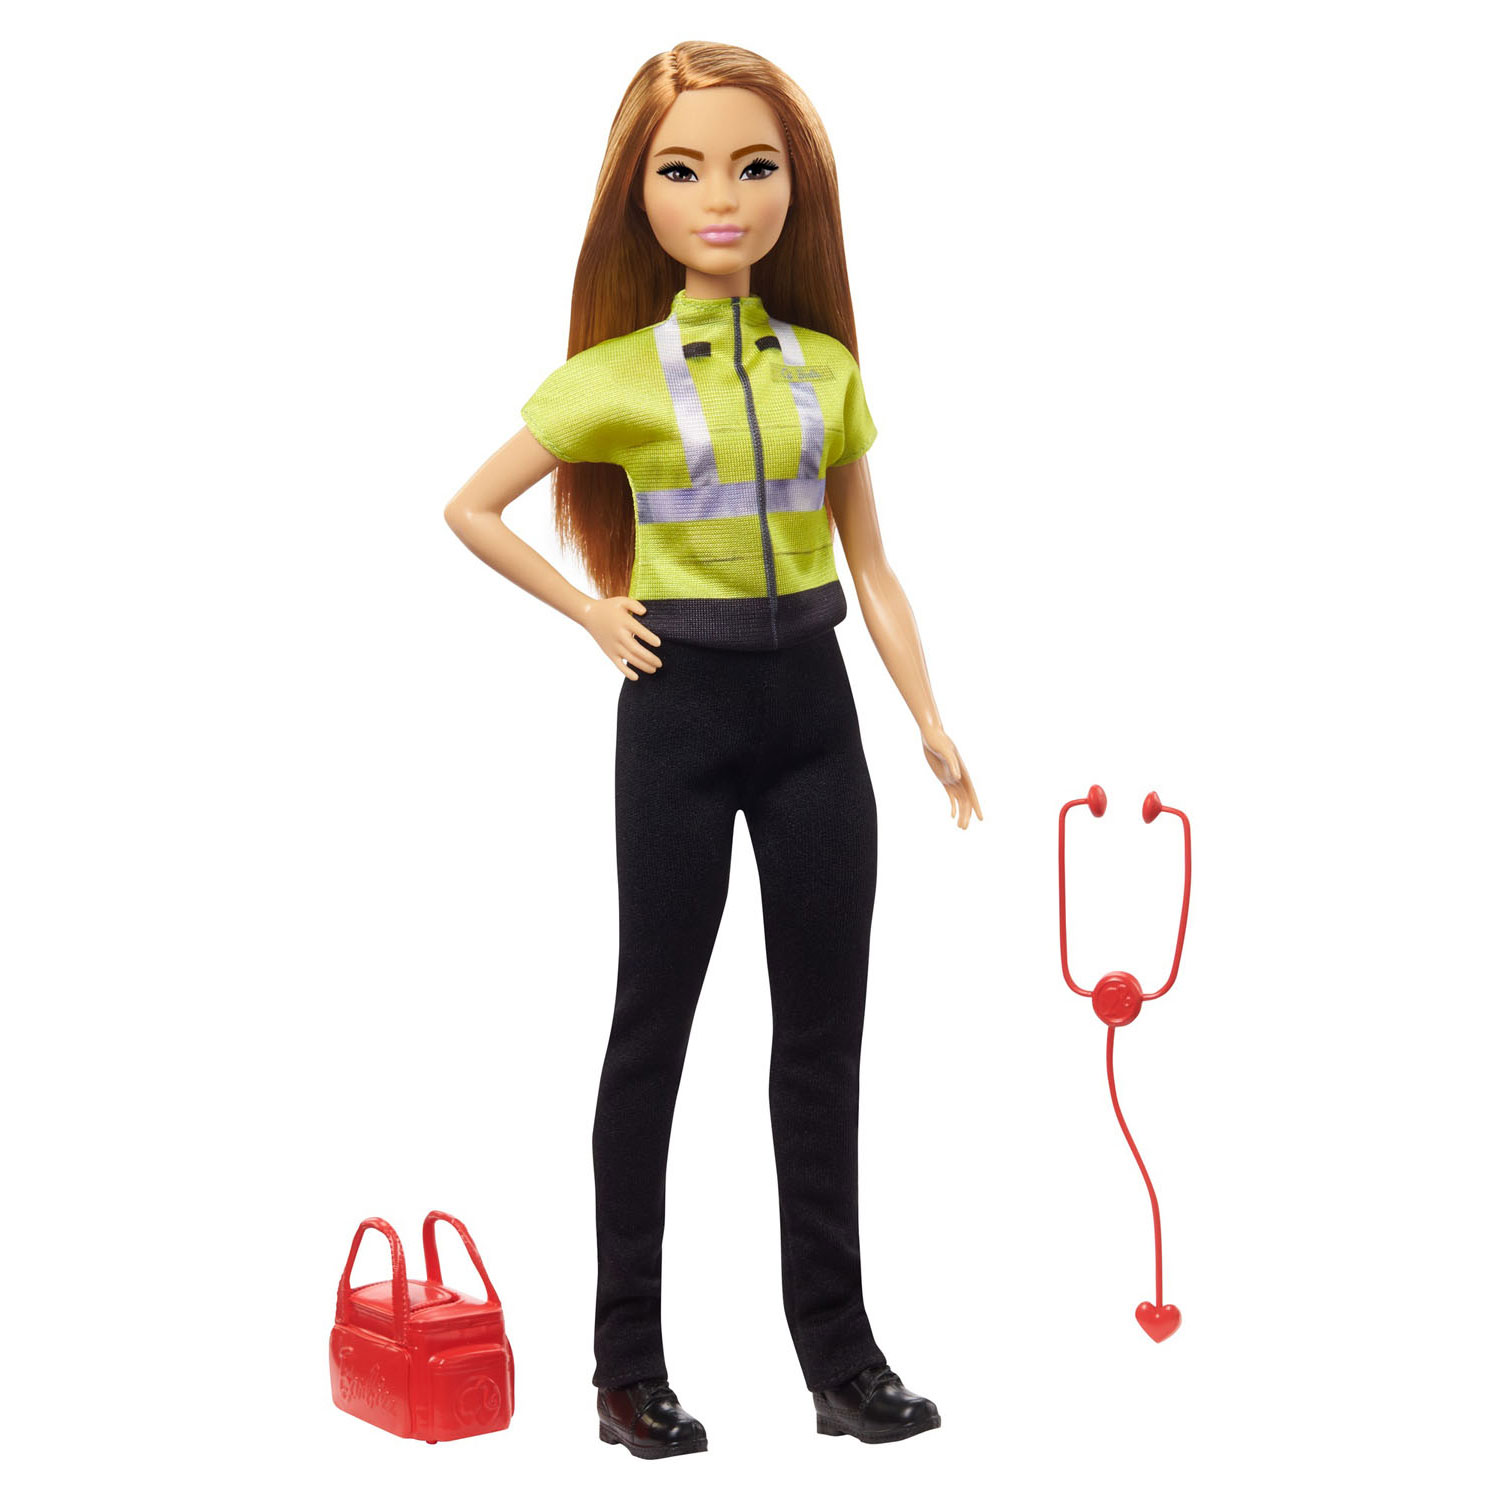 Geplooid slachtoffer bungeejumpen Barbie Ambulance Nurse Doll | Thimble Toys